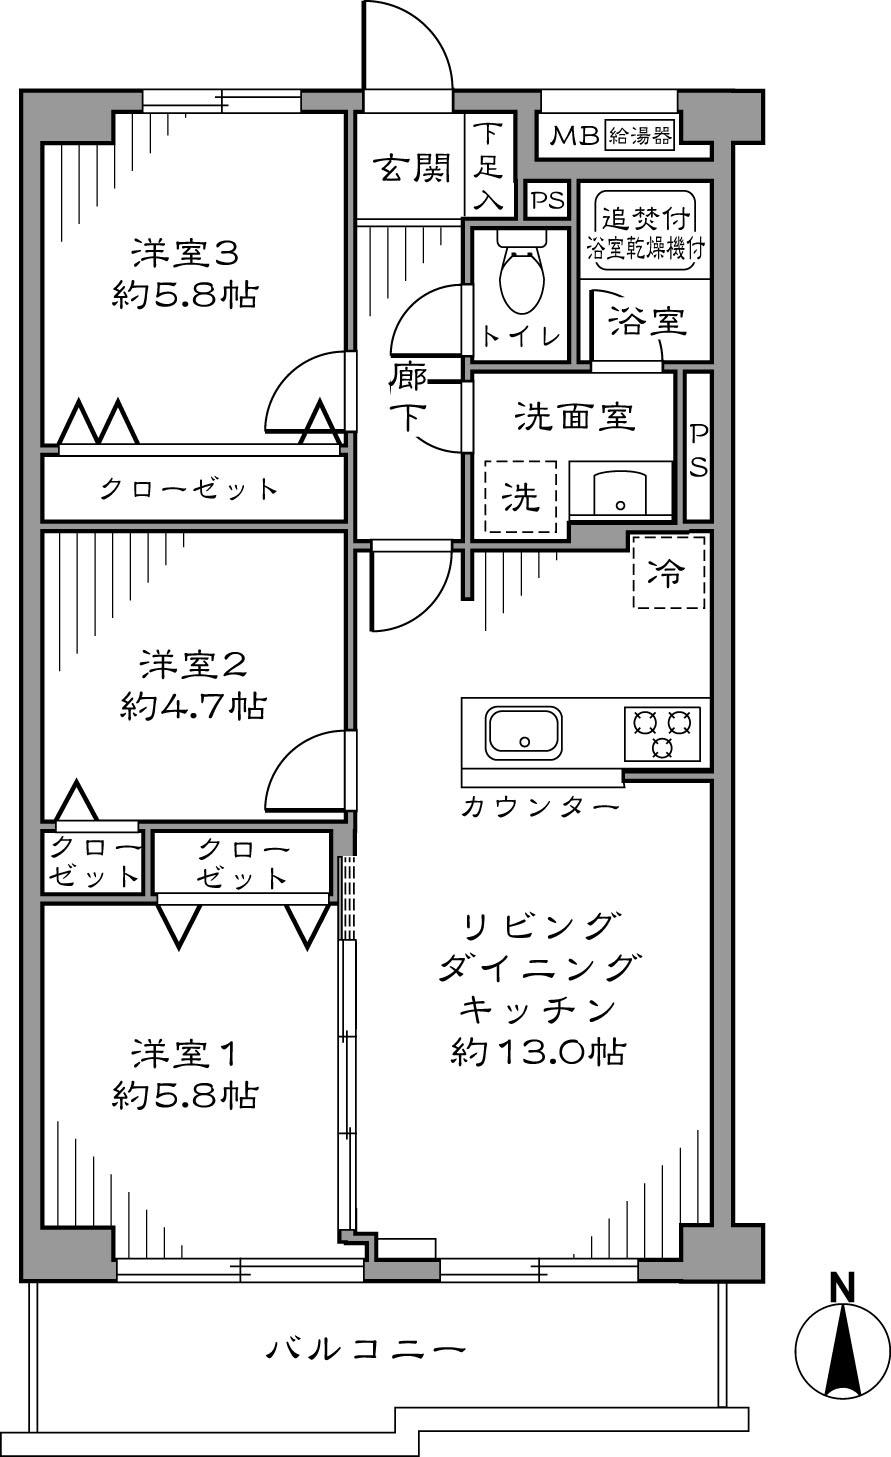 Floor plan. 3LDK, Price 39,800,000 yen, Occupied area 61.19 sq m , Balcony area 8.01 sq m per yang ・ View good of 3LDK